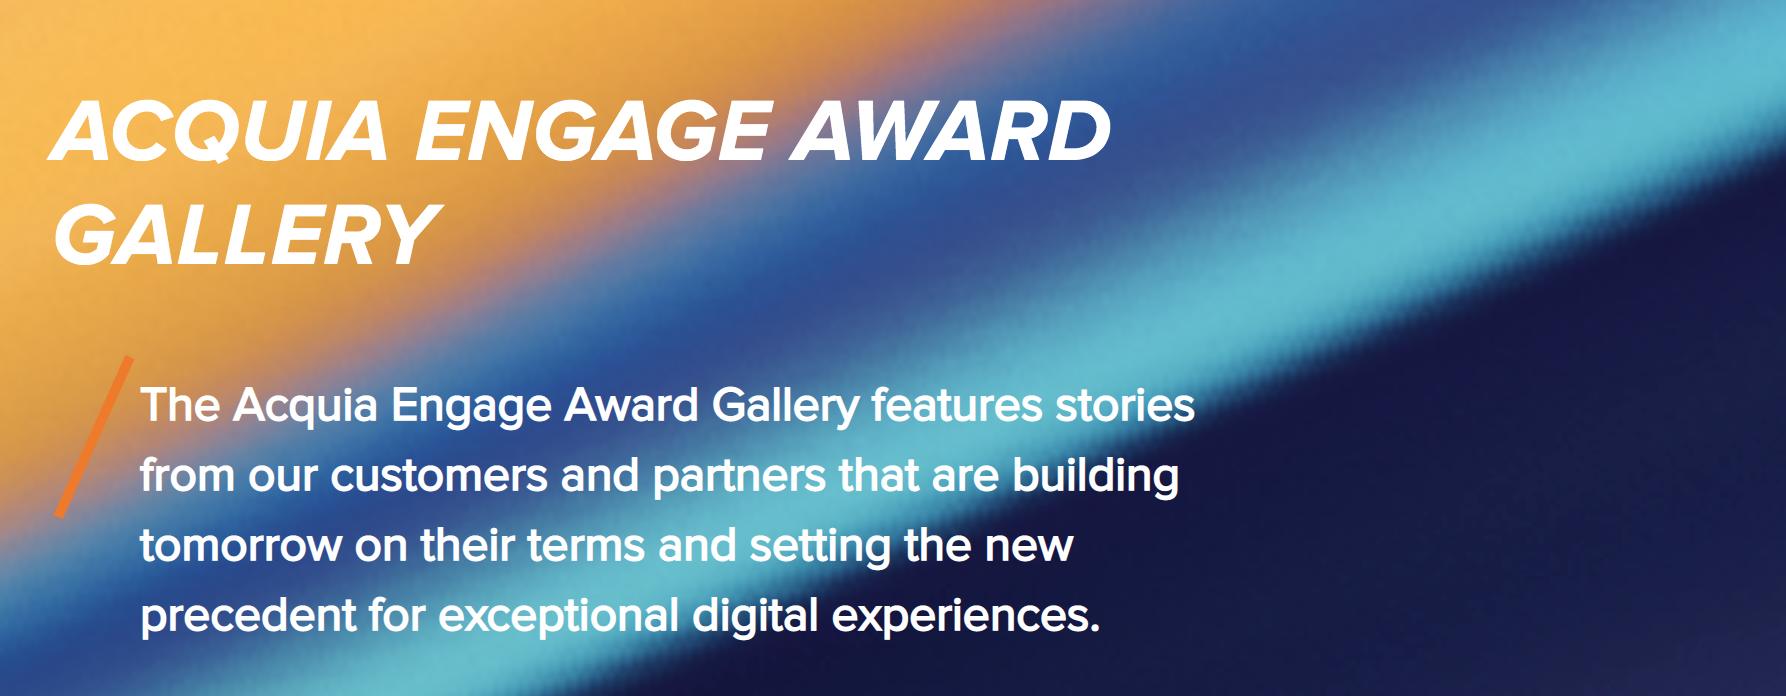 Acquia Engage Award Gallery